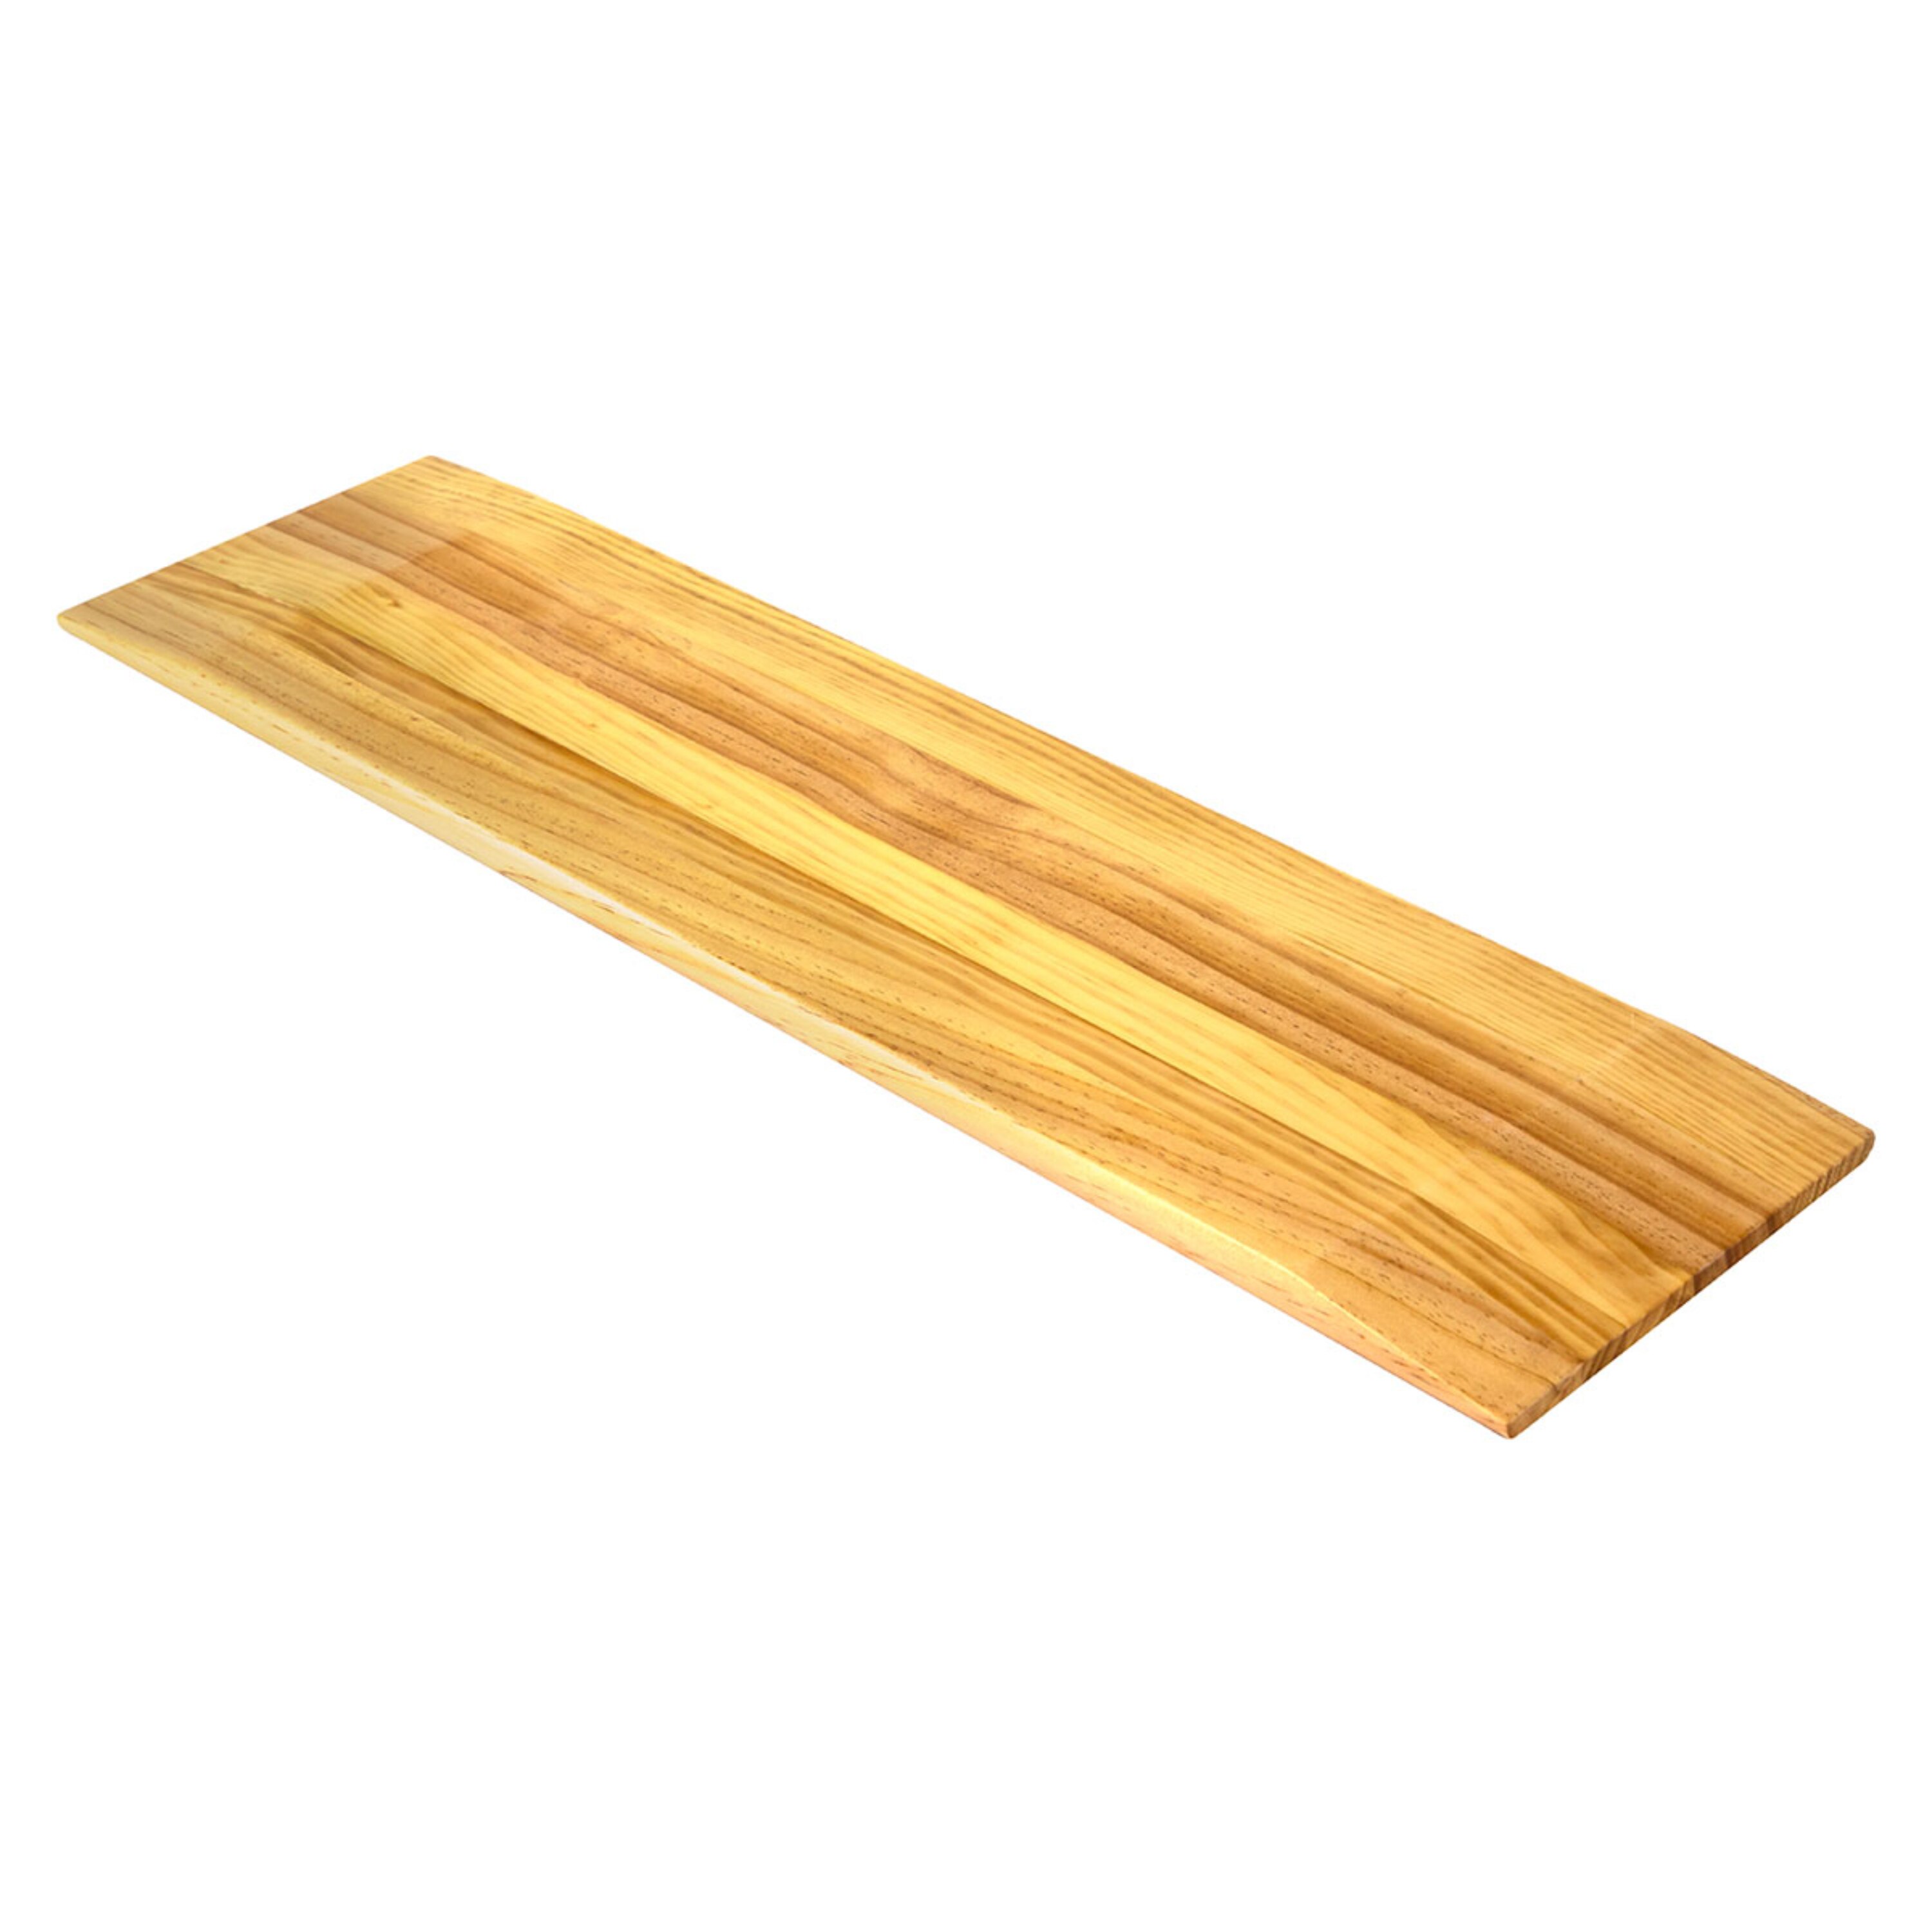 FabLife Wood Transfer Board, No Handgrips, 8 X 30 , CVS